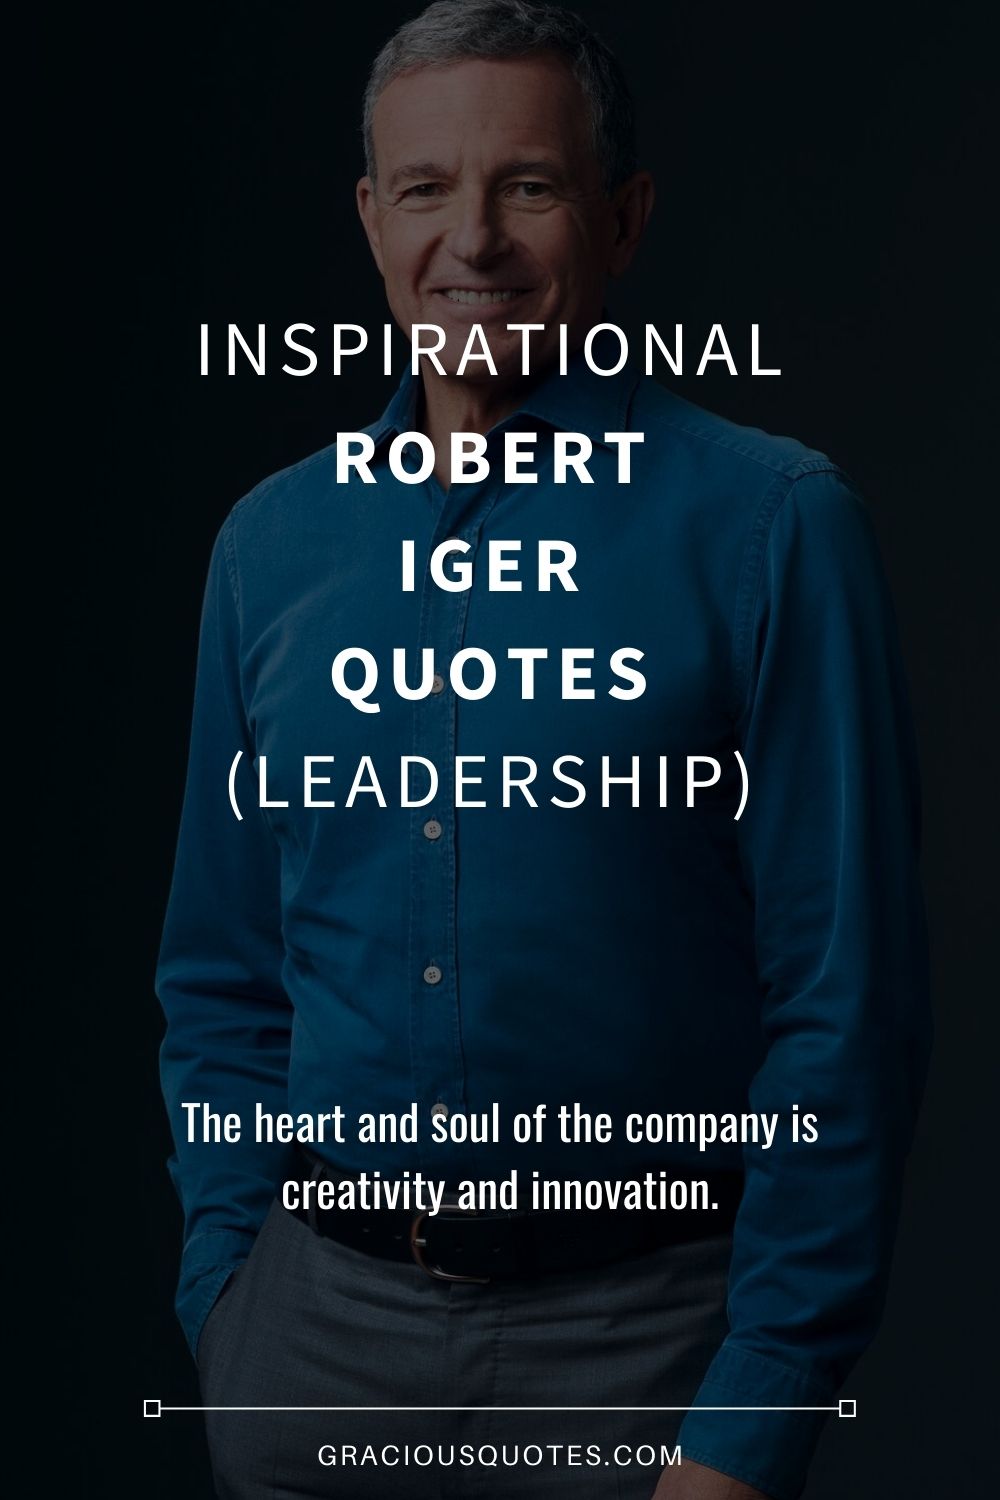 Inspirational Robert Iger Quotes (LEADERSHIP) - Gracious Quotes